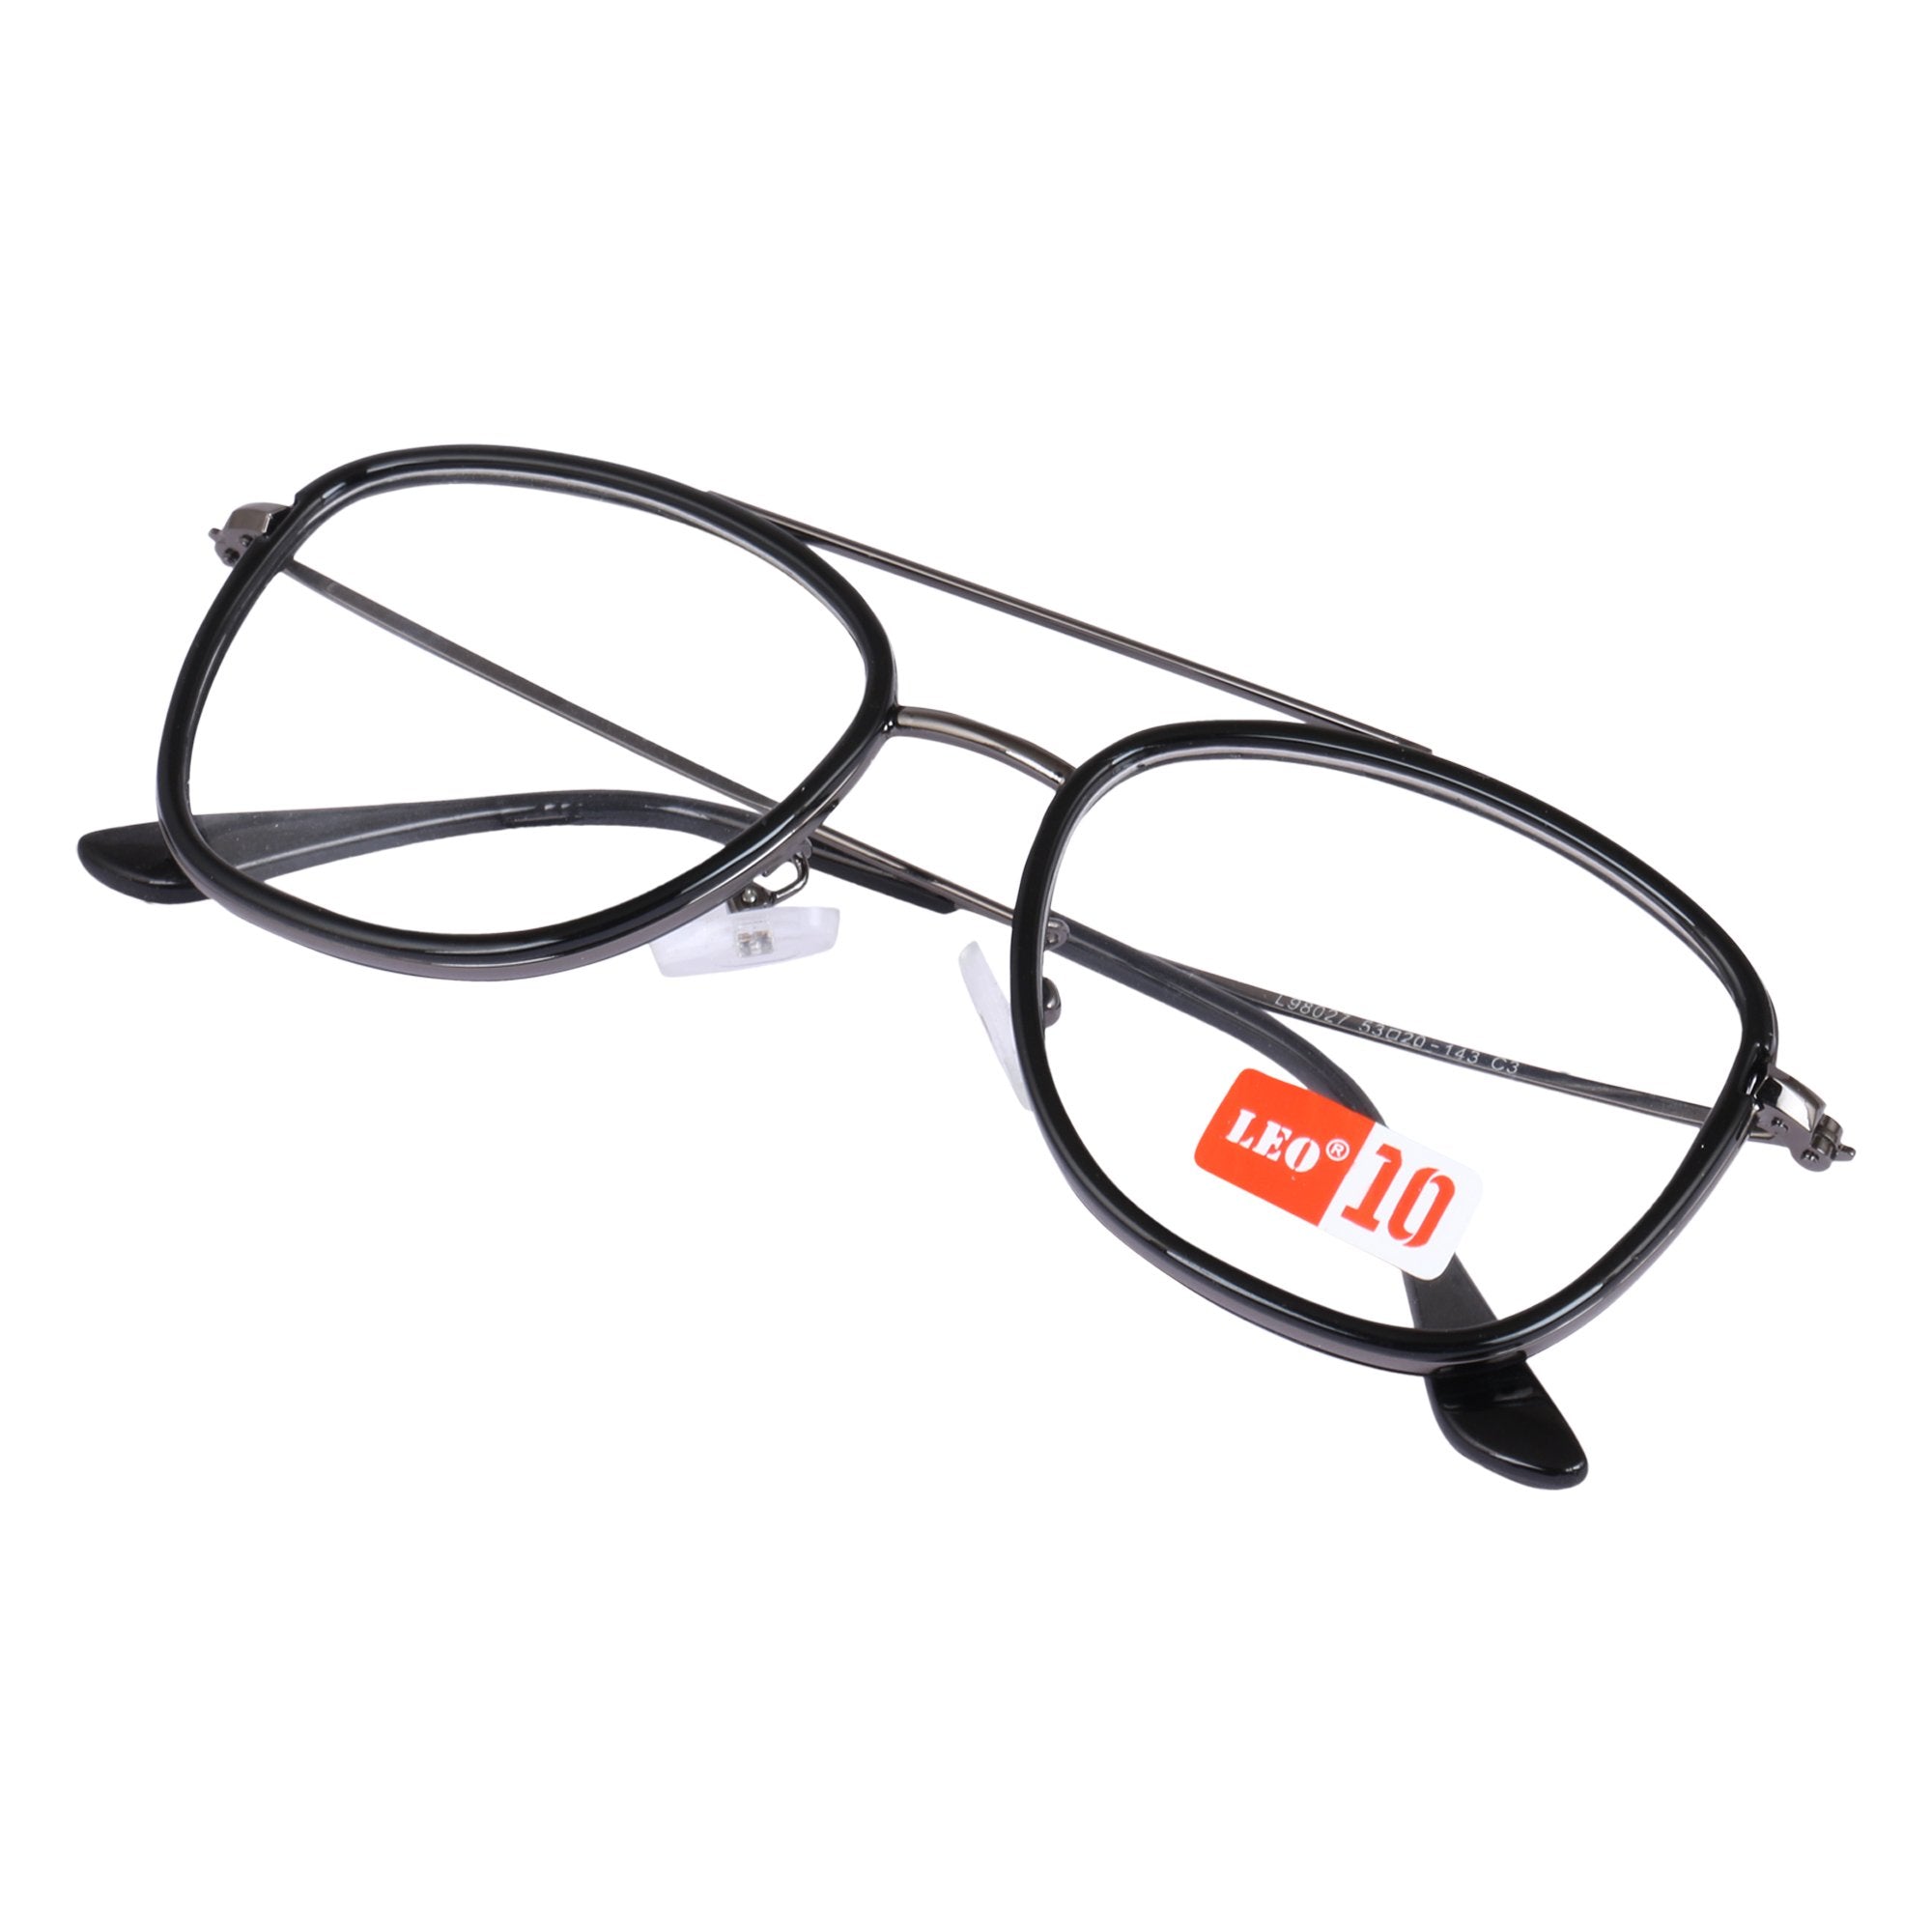 Grey Square Metal Eyeglasses - L98027